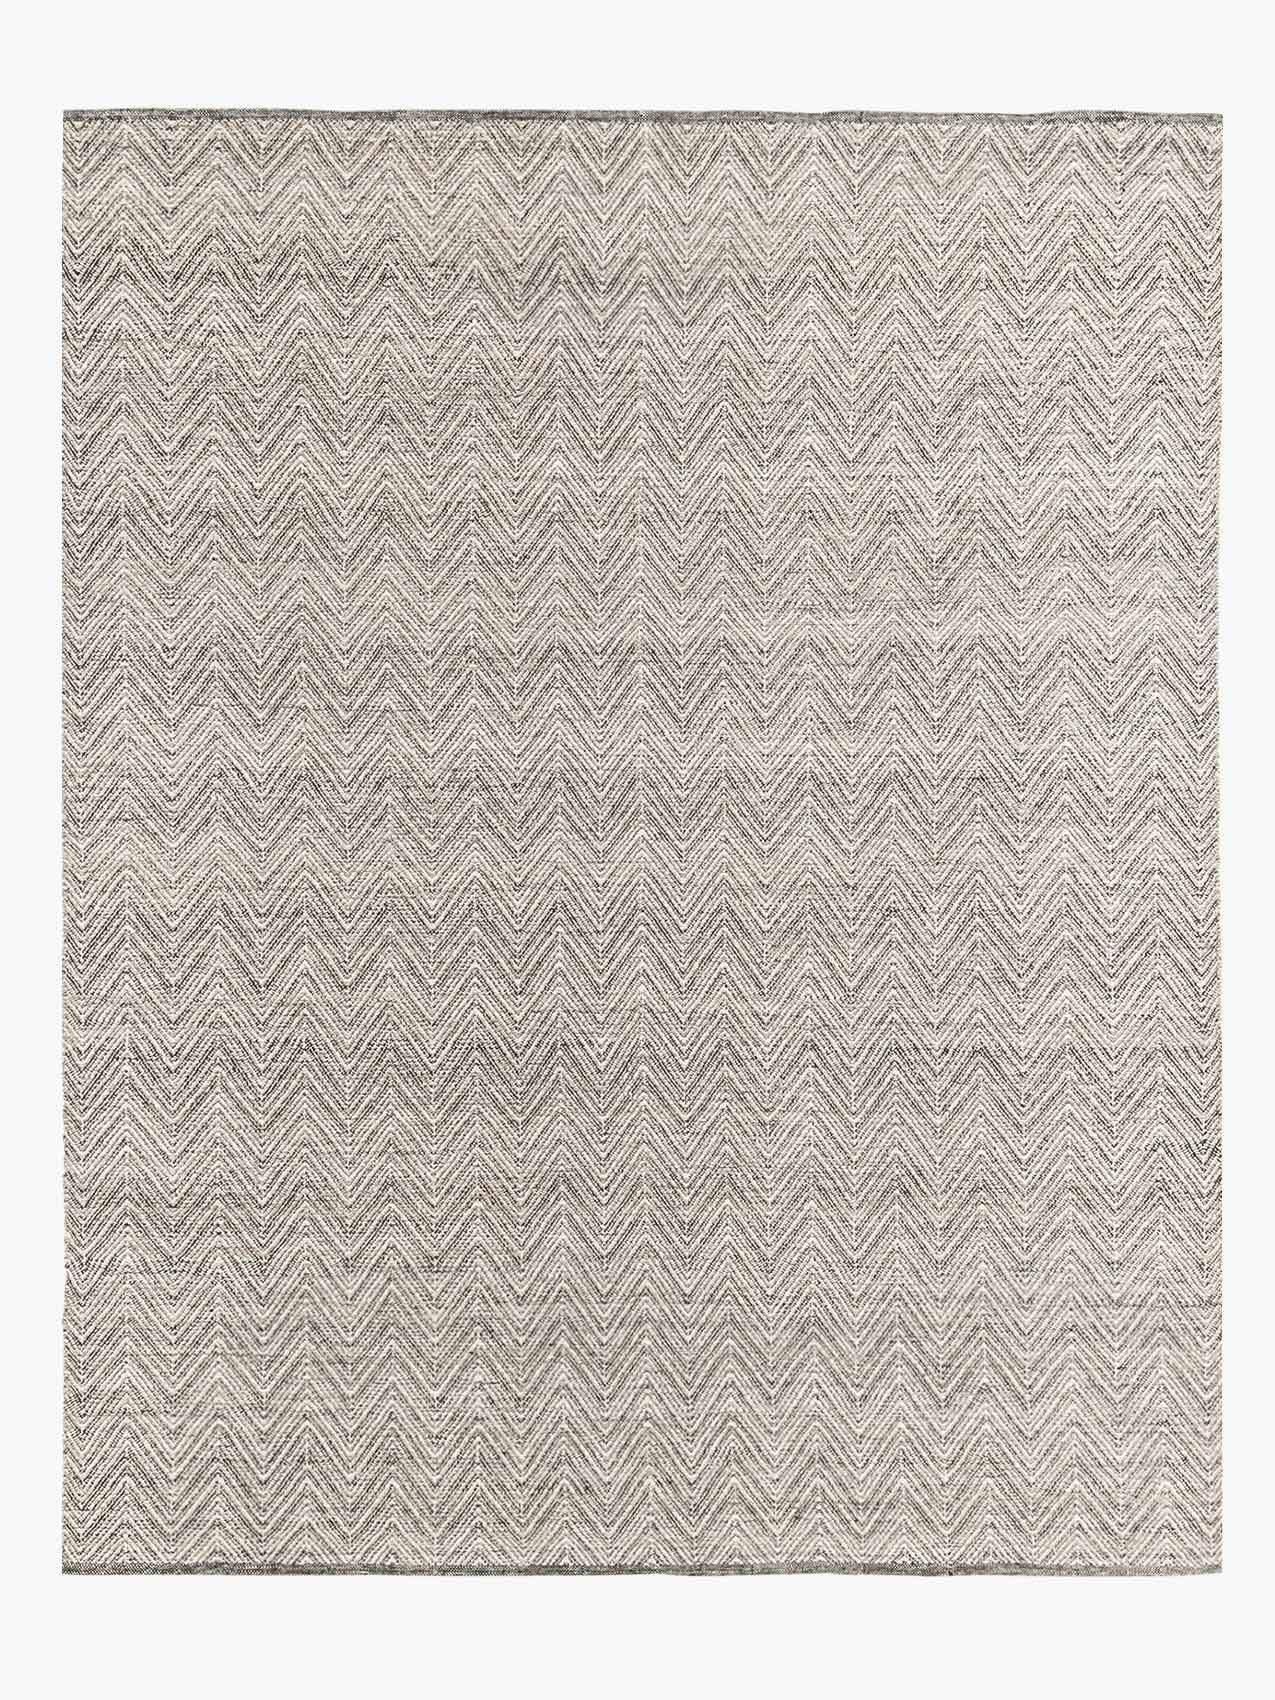 For Sale: Beige (Sand) Ben Soleimani Ceyah Rug– Hand-woven Plush Textured Wool + Linen Charcoal 9'x12'